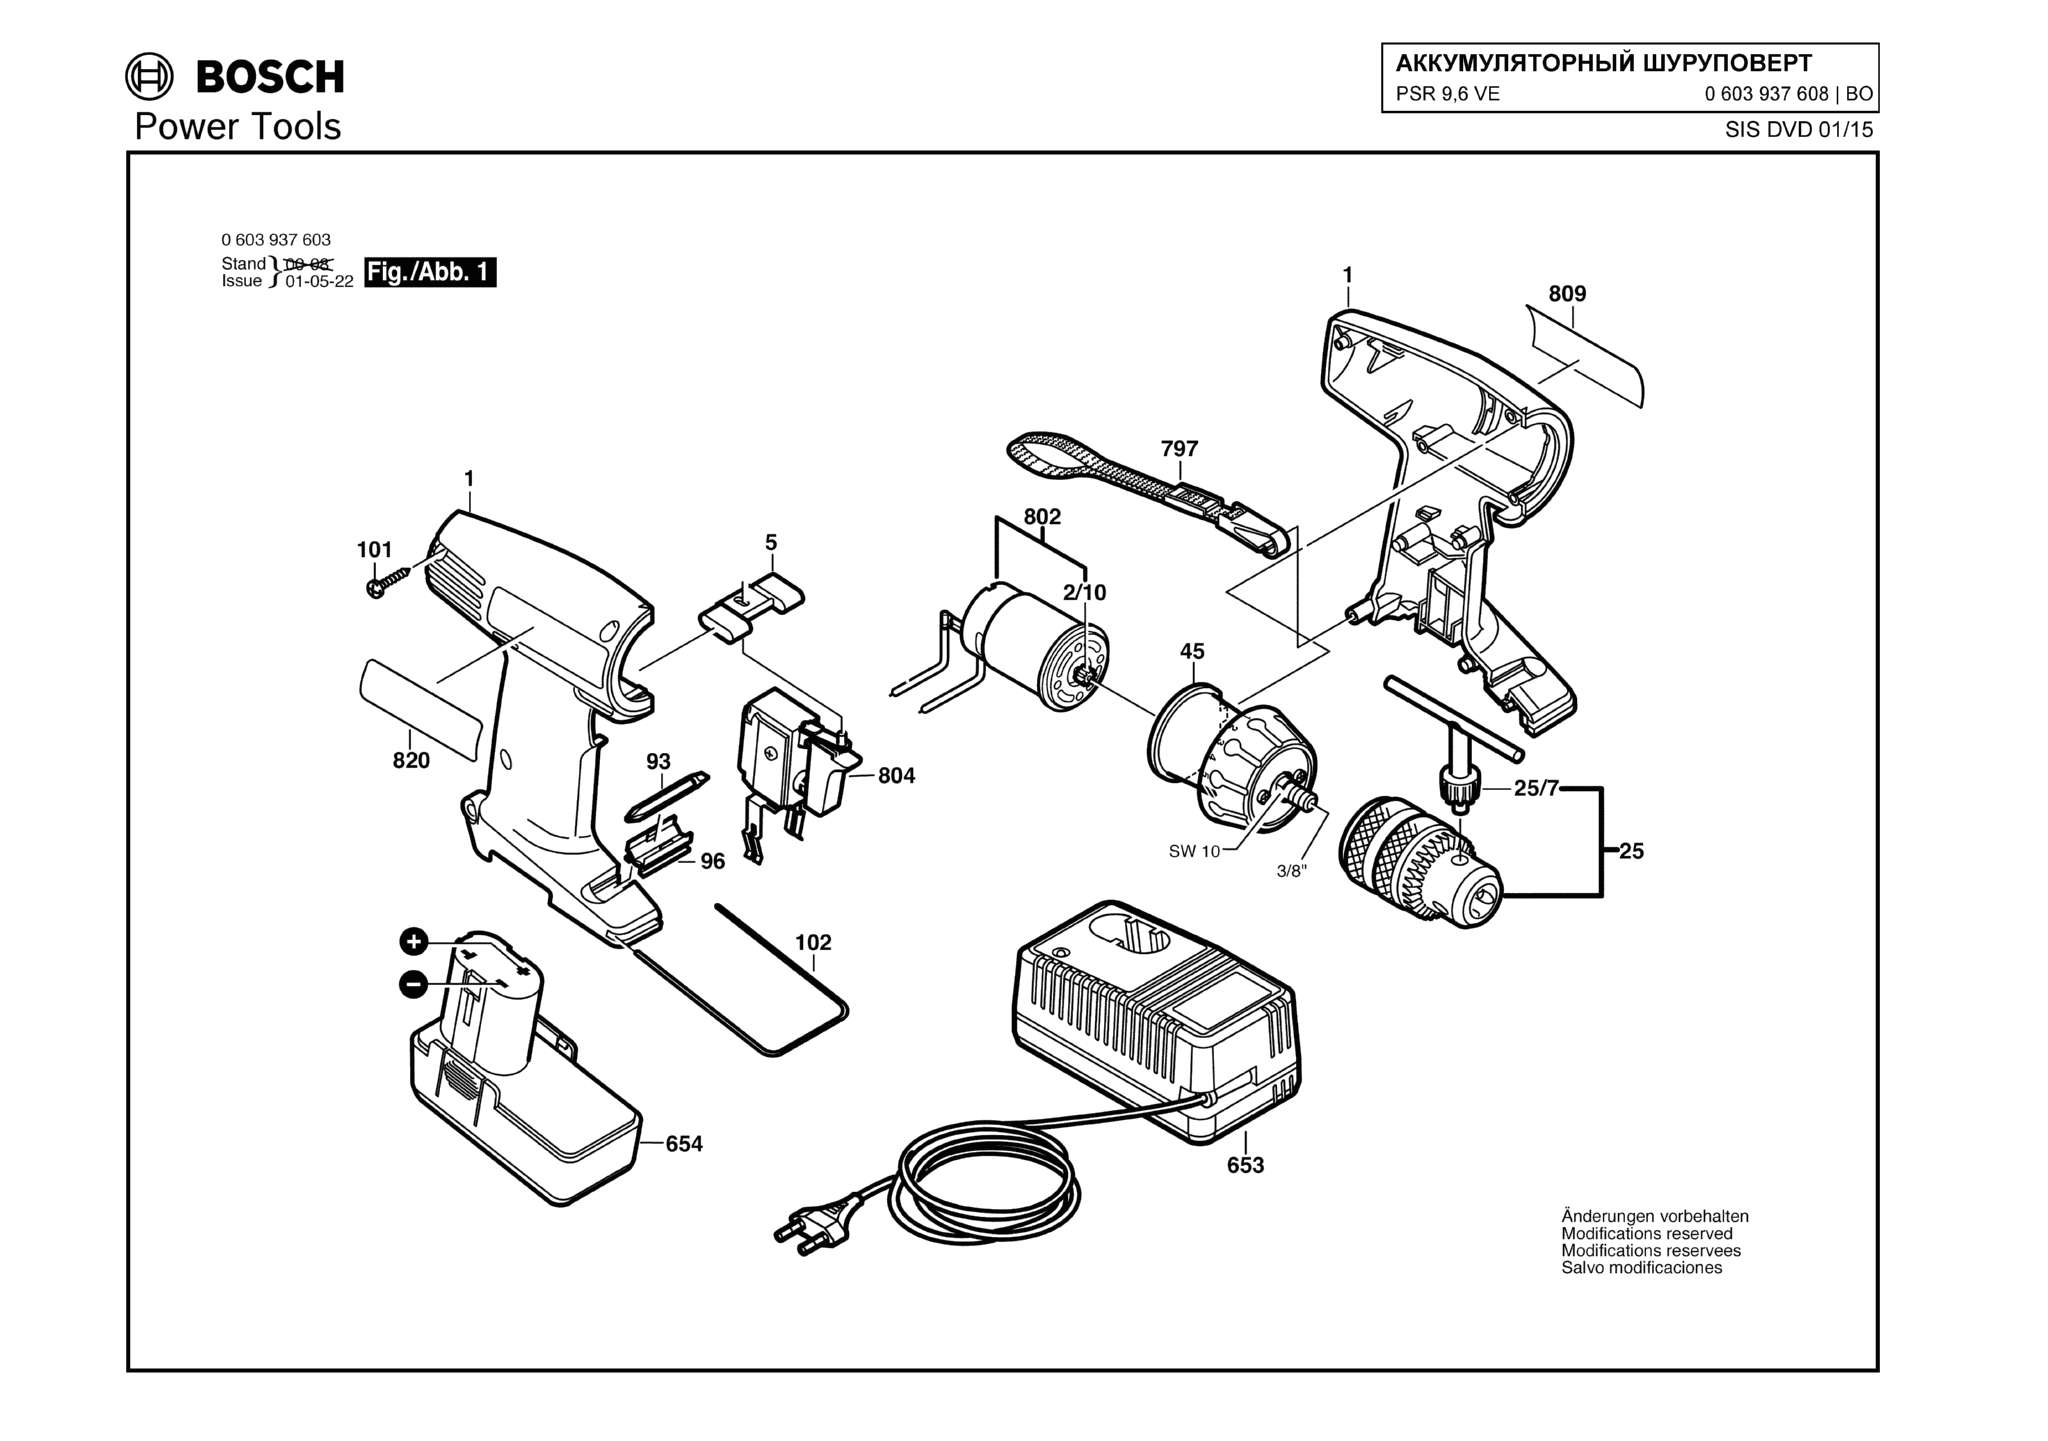 Запчасти, схема и деталировка Bosch PSR 9,6 VE (ТИП 0603937608)